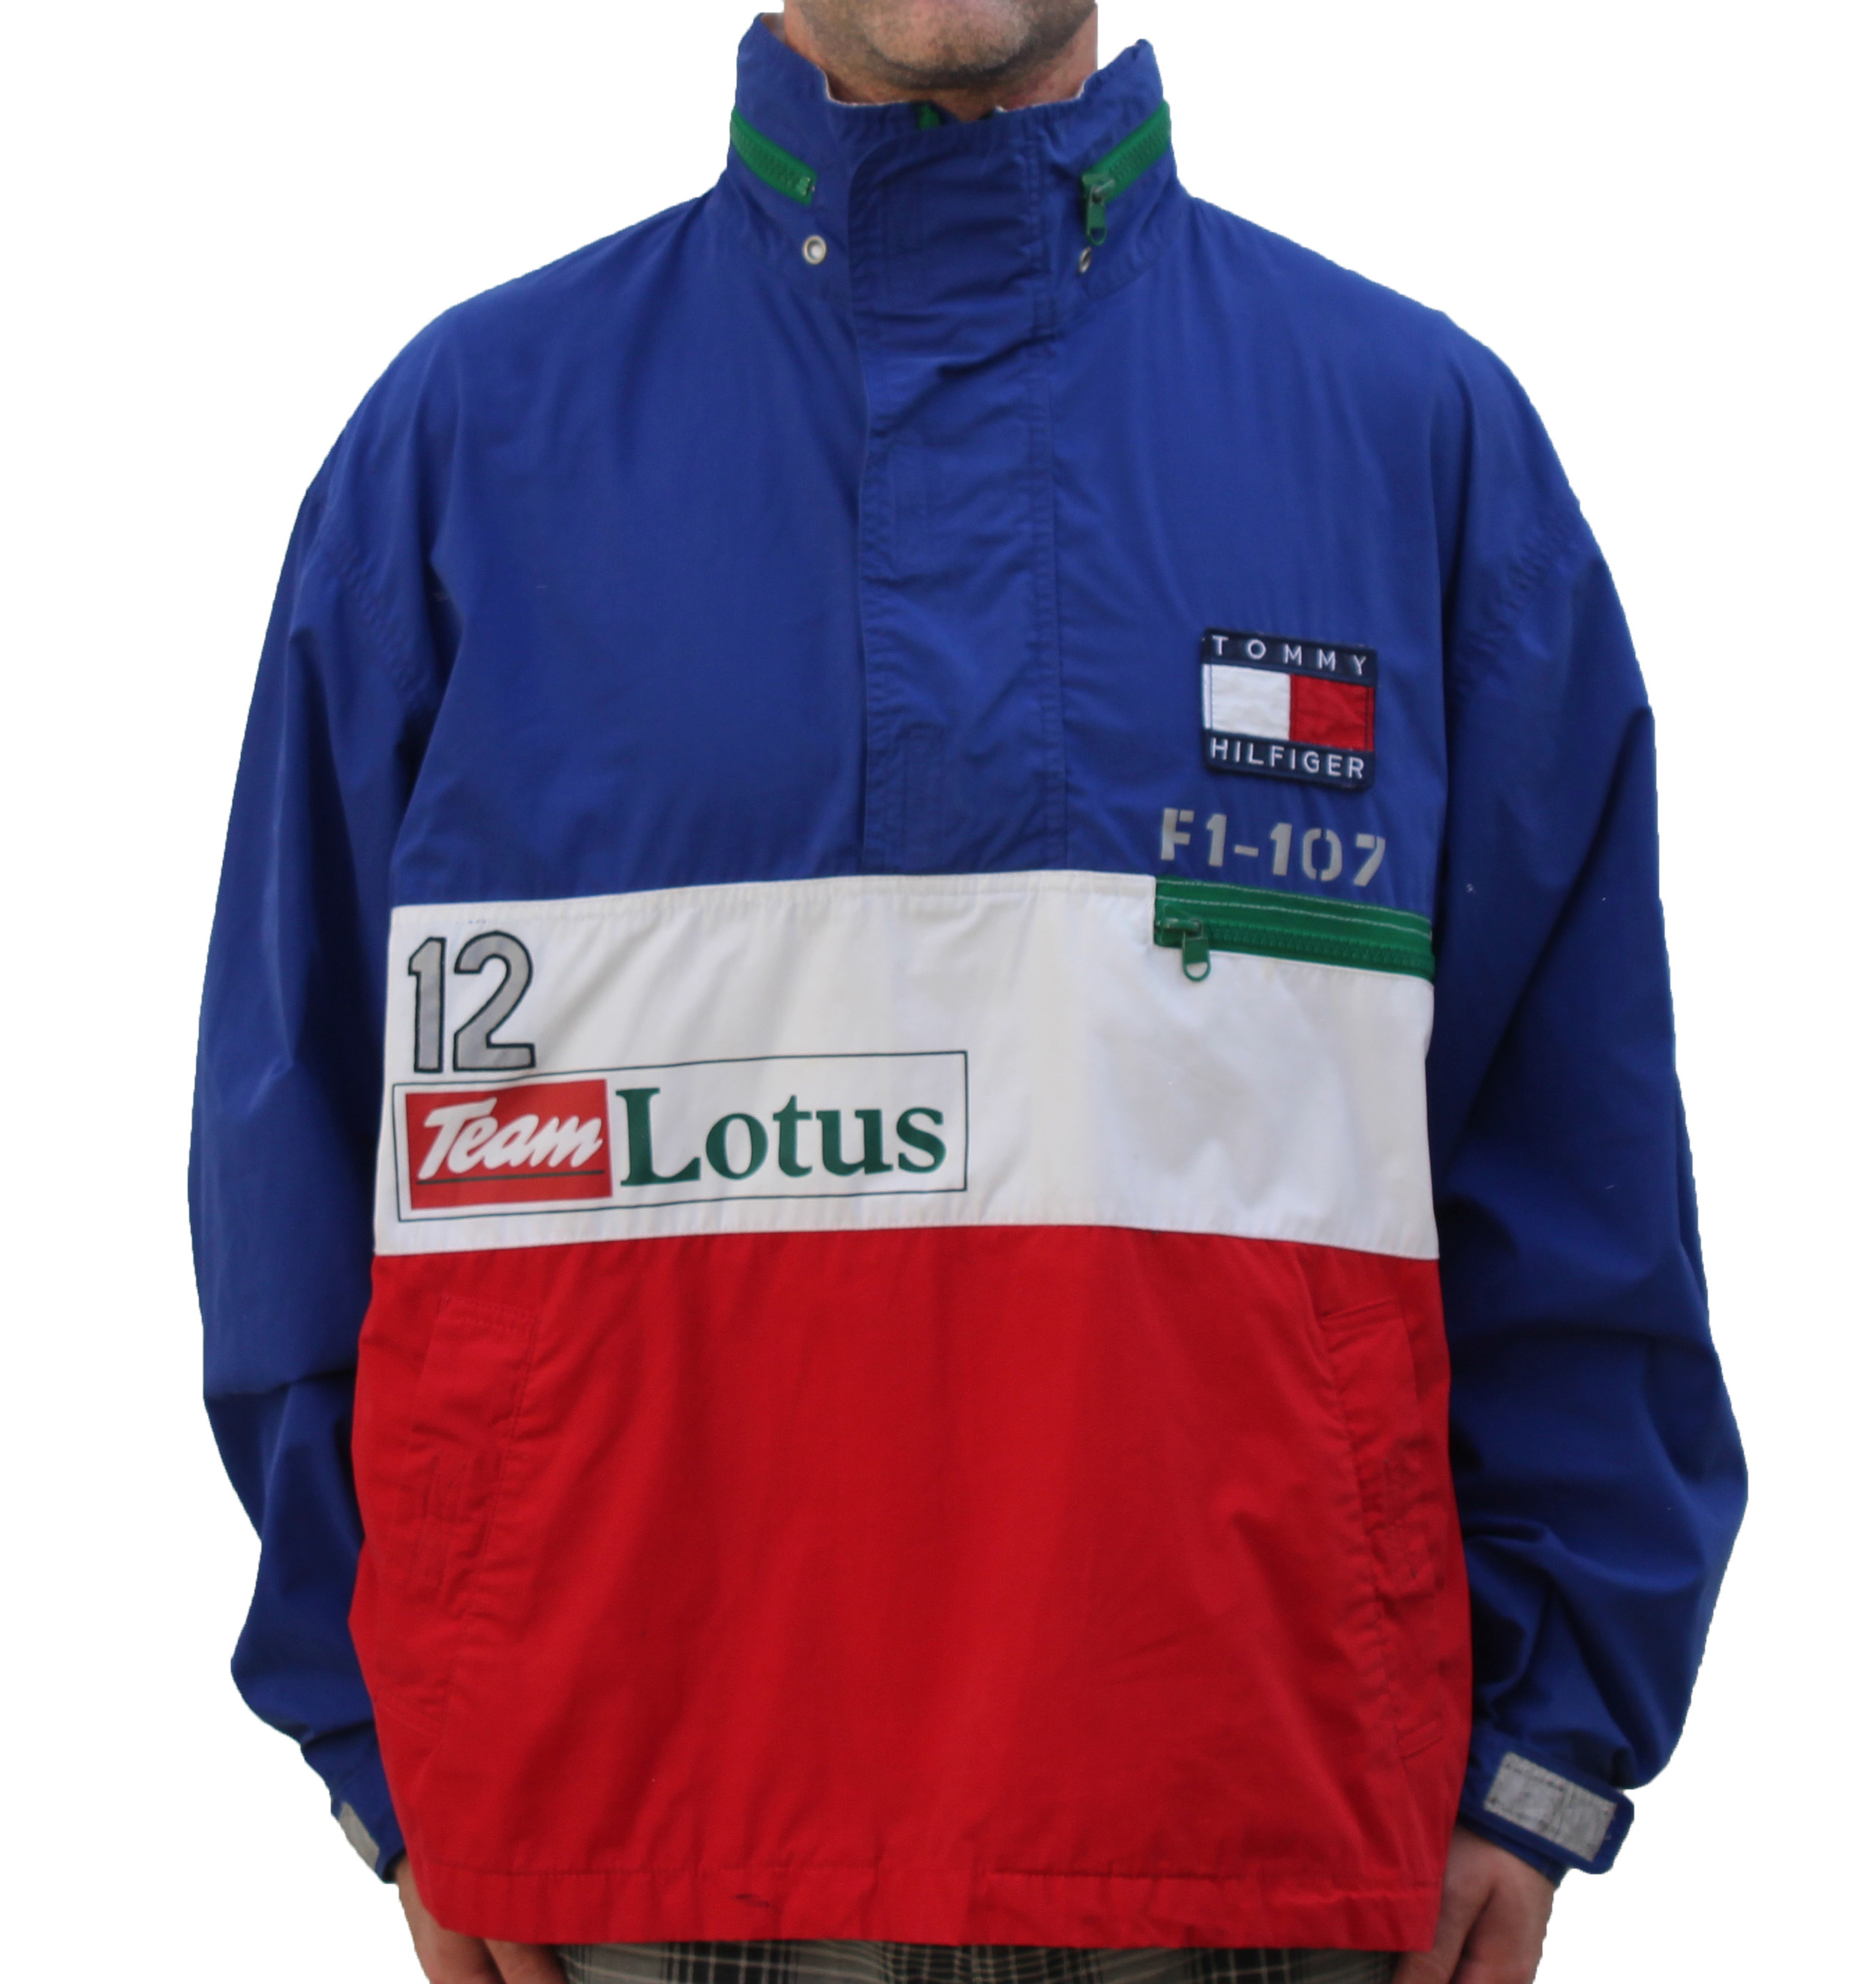 tommy hilfiger racing jacket